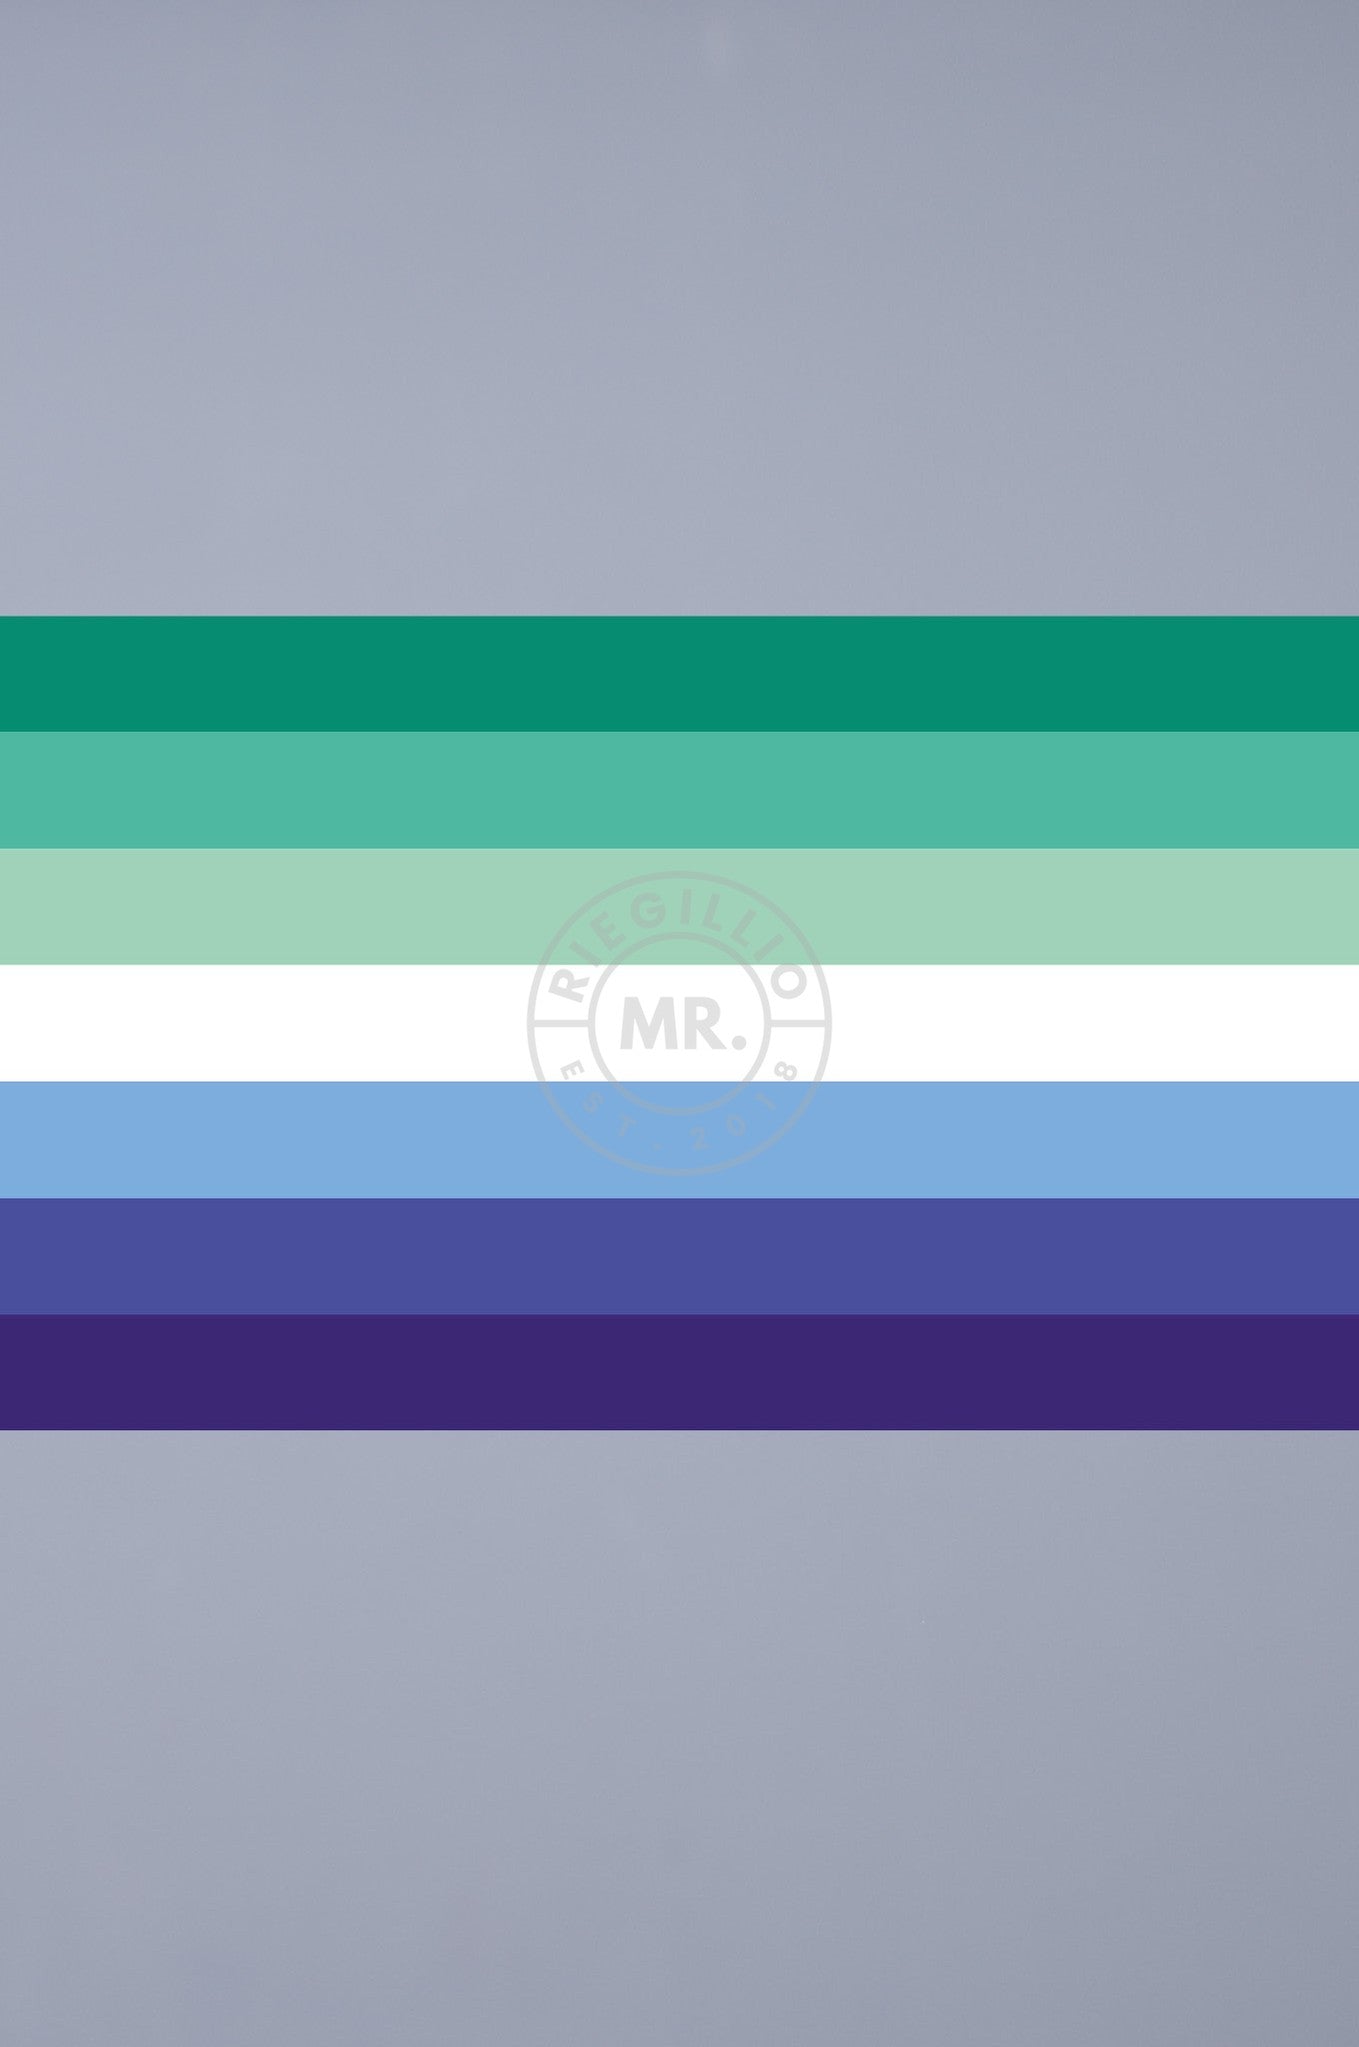 Pride Flag - Trans Inclusive Gay Men - 90 x 150 cm at MR. Riegillio